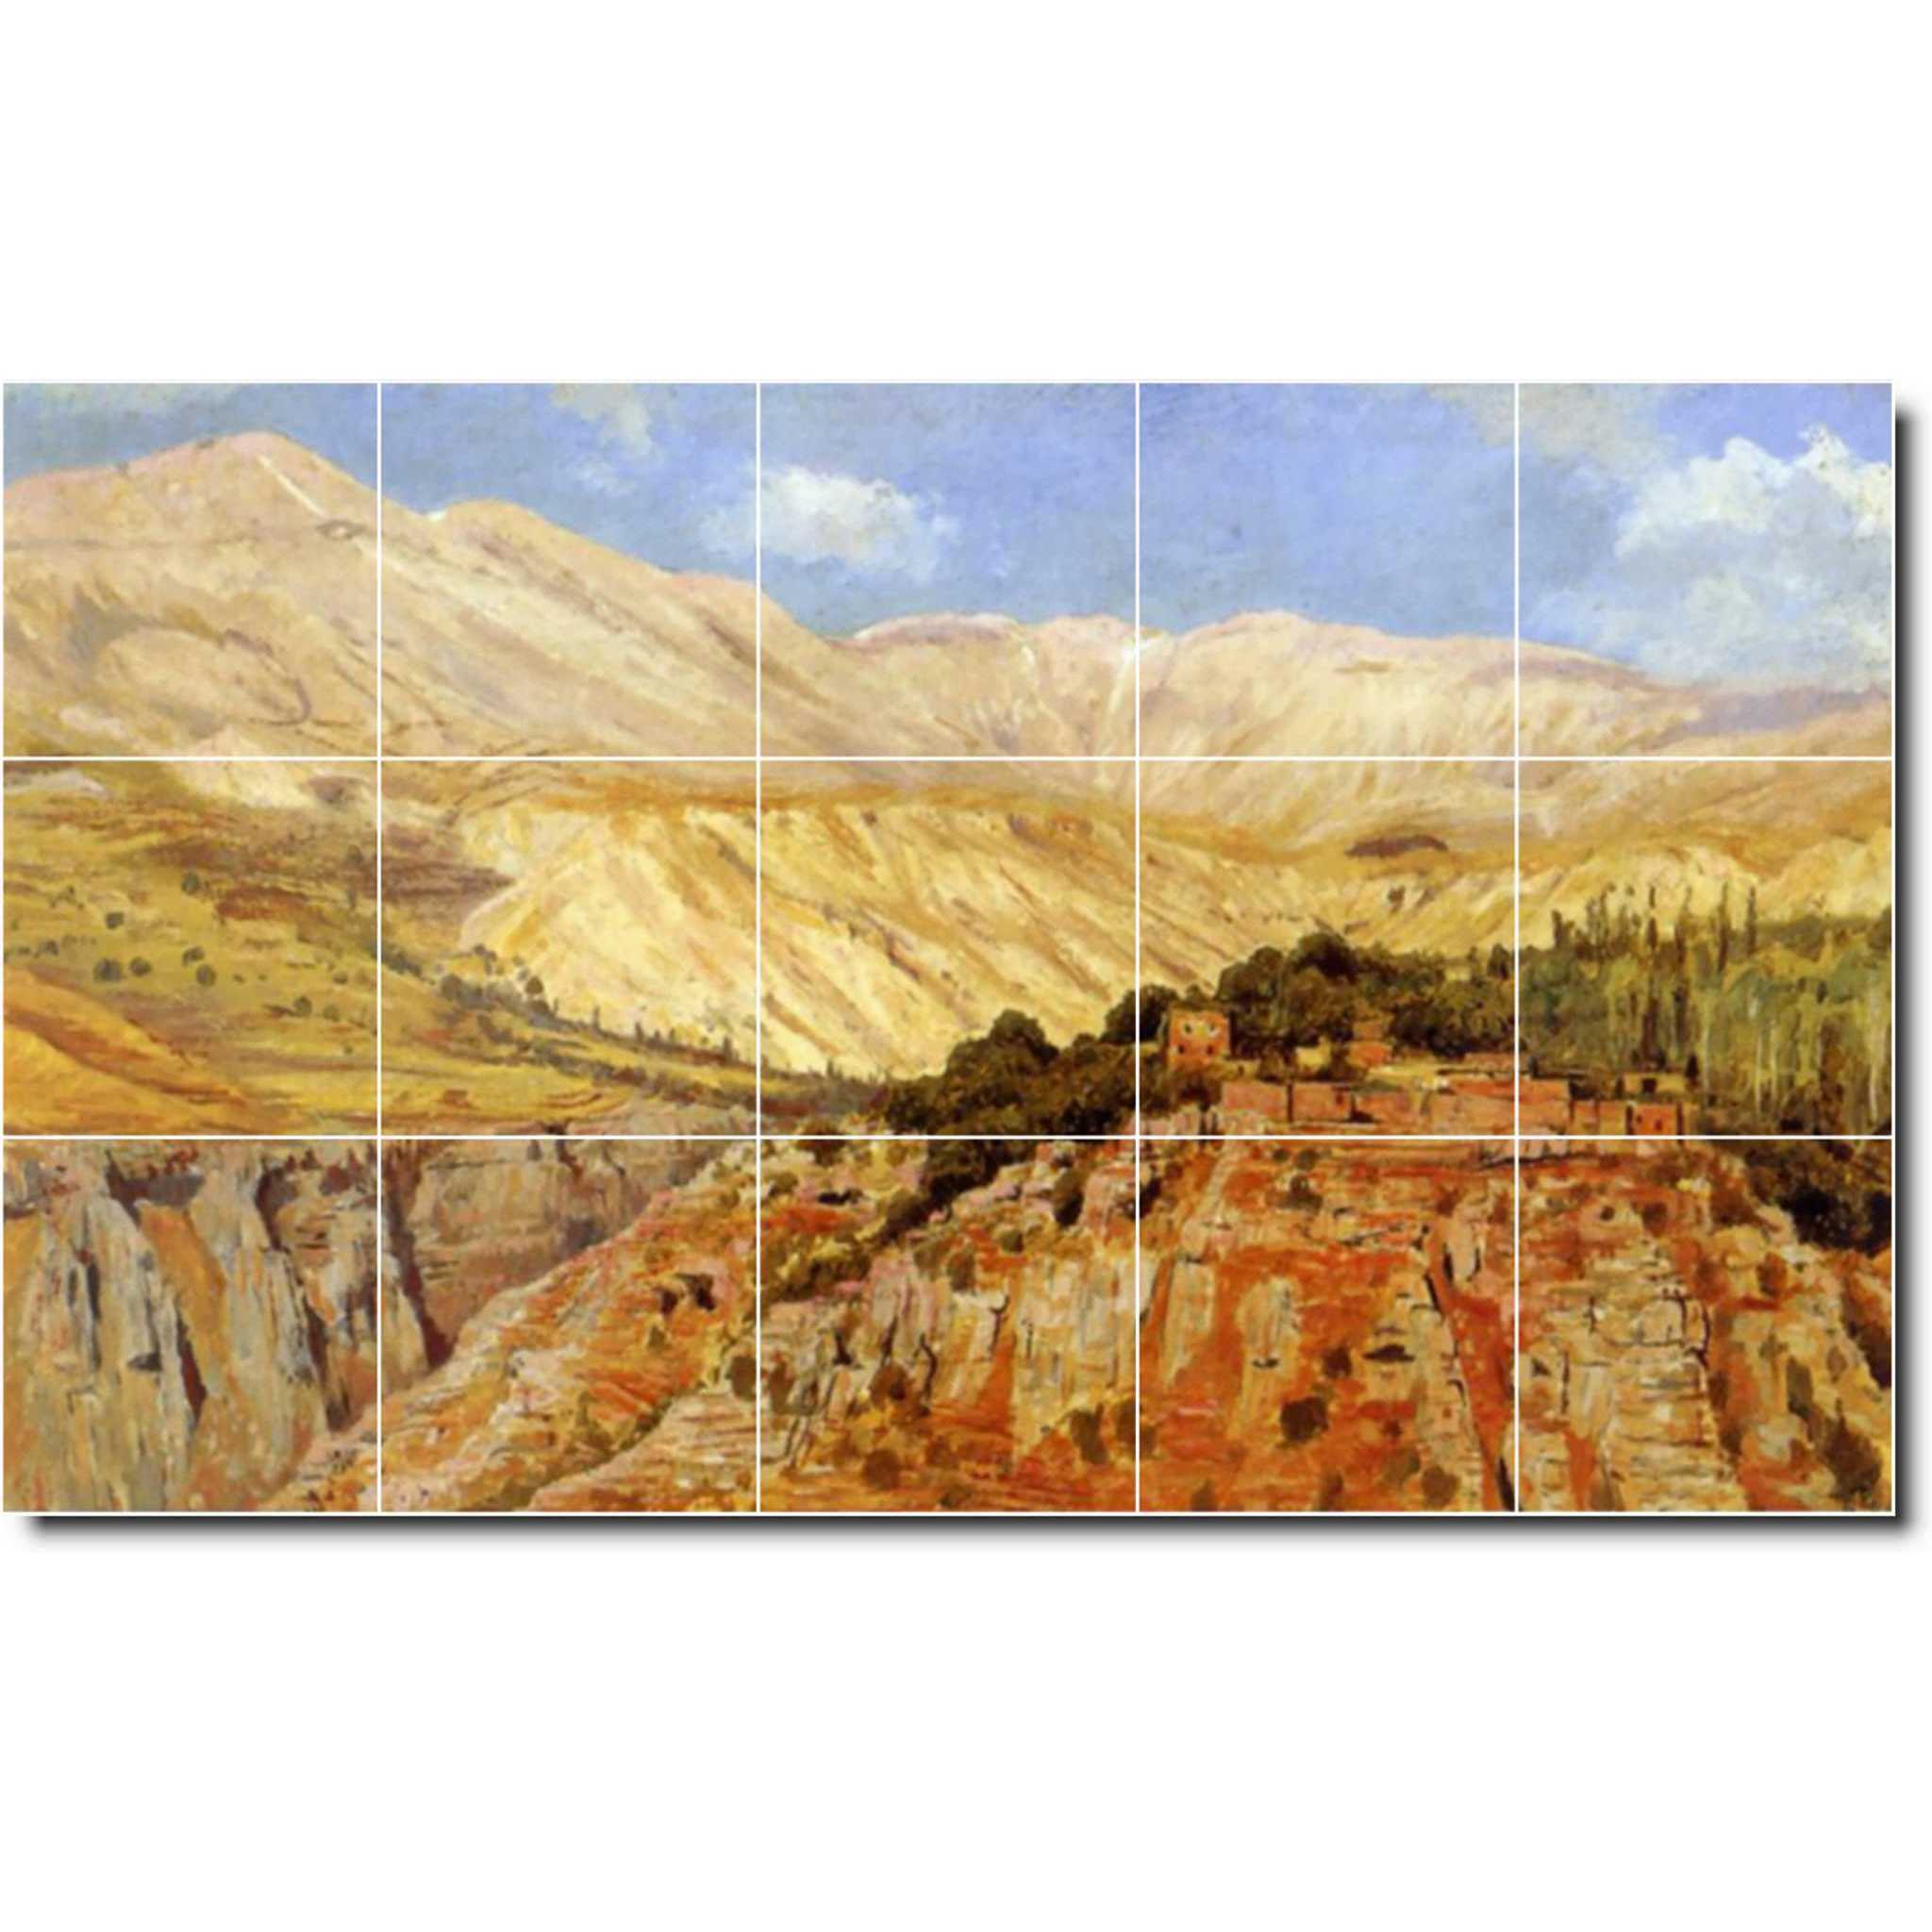 edwin weeks landscape painting ceramic tile mural p09631